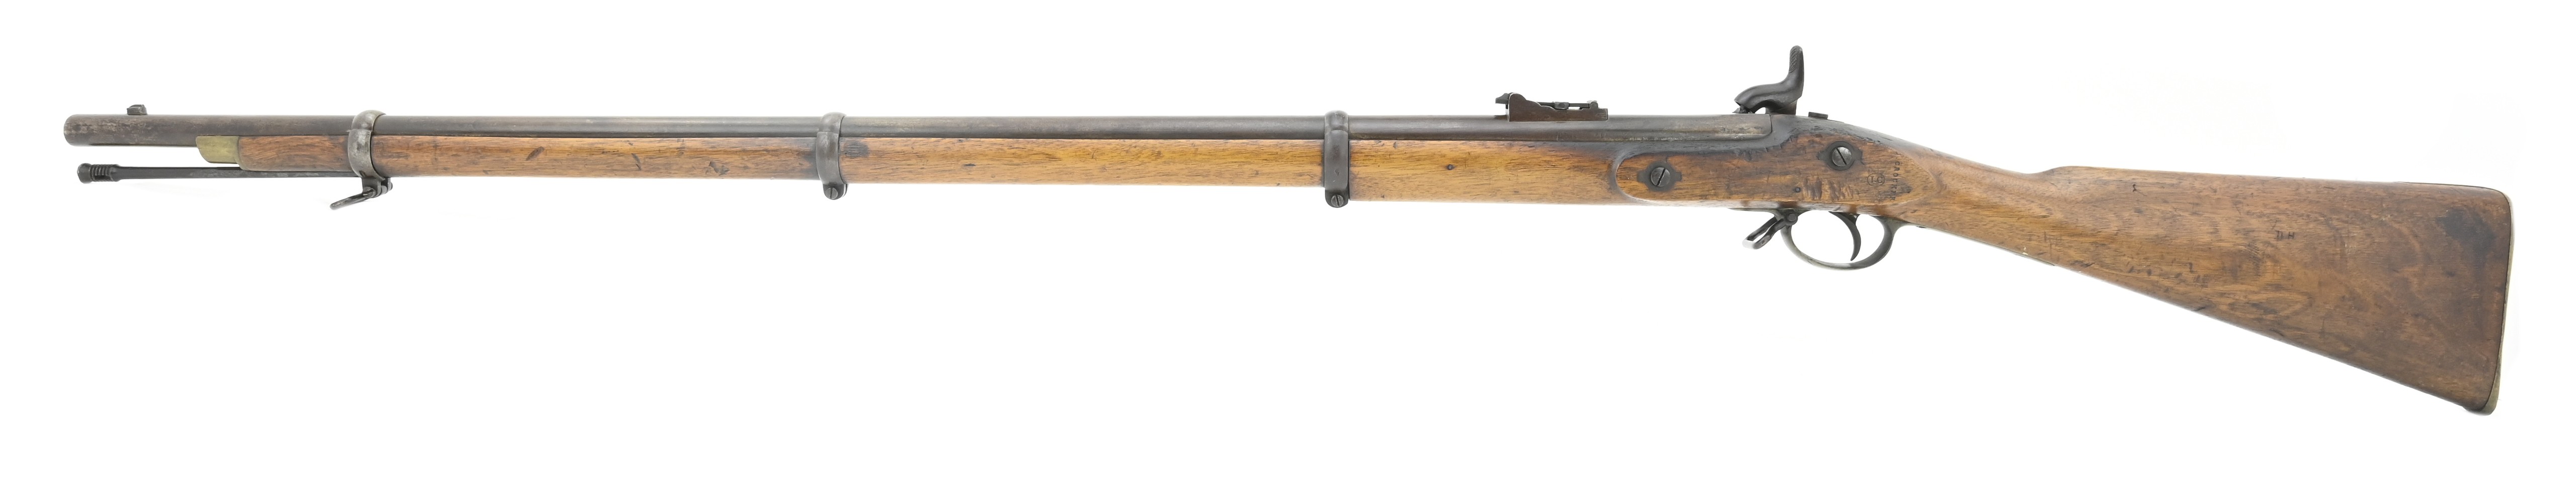 Civil War Confederate Pattern 1853 Enfield Rifle-Musket by Barnett